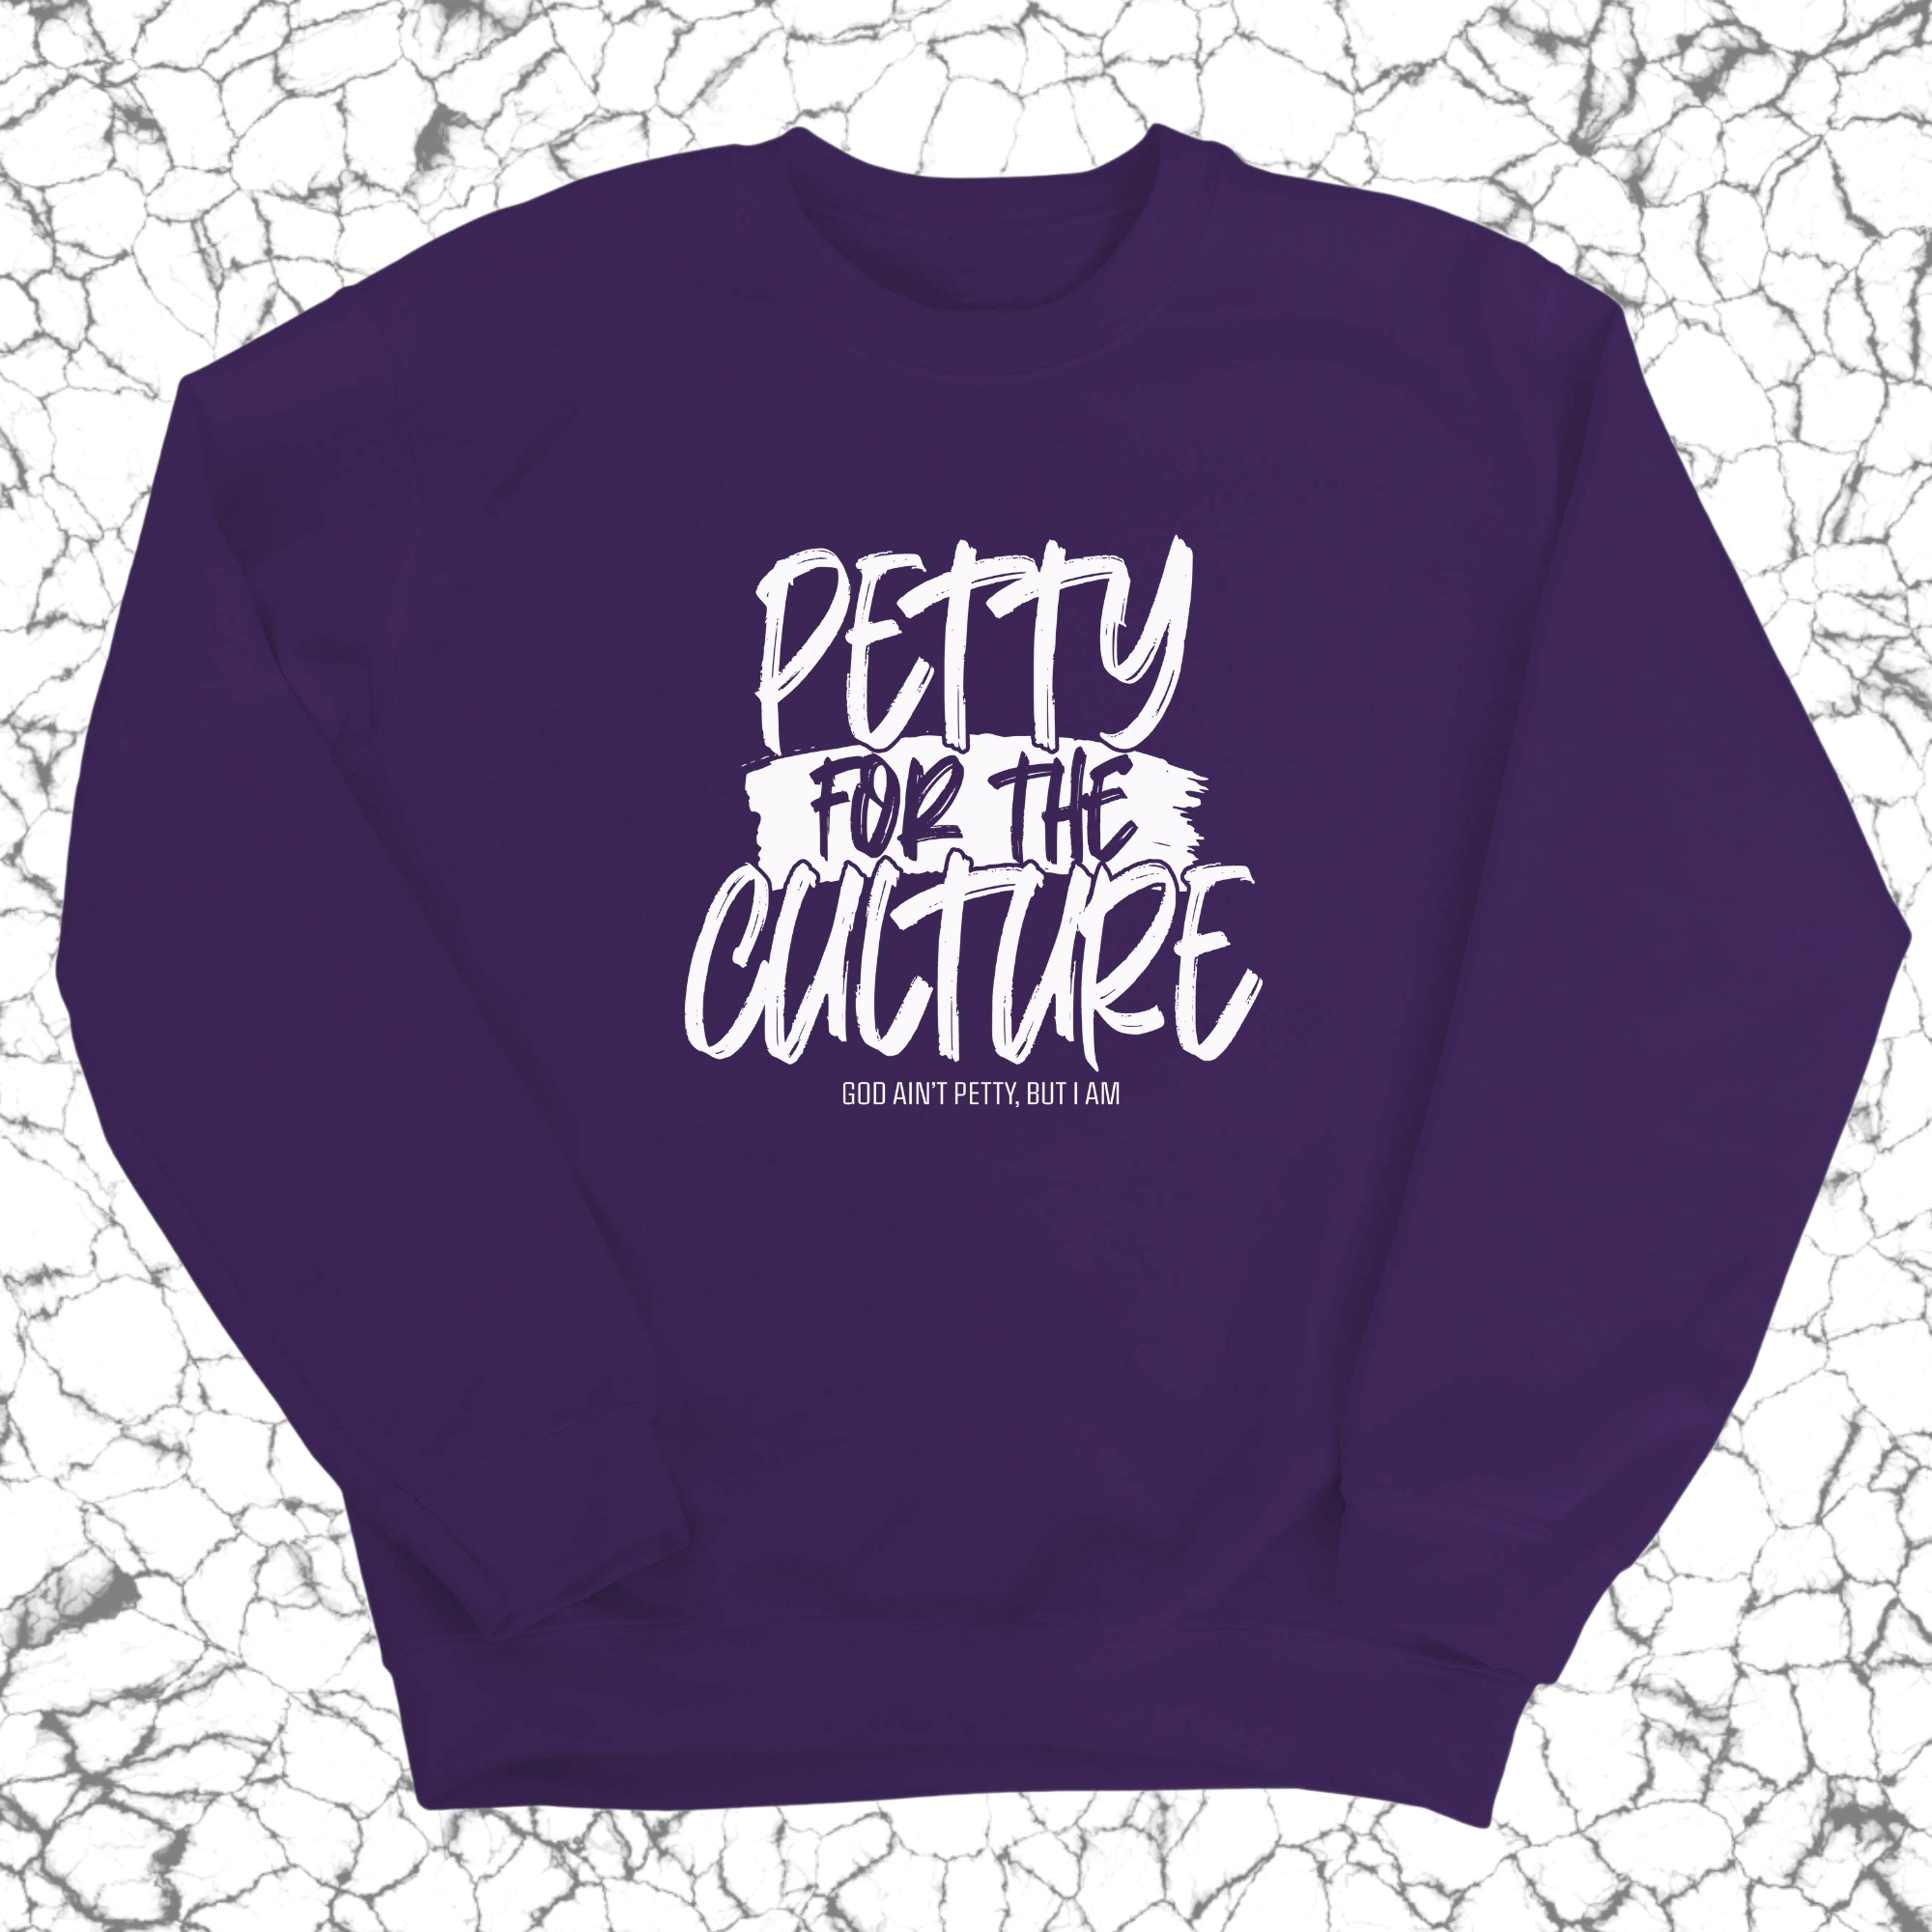 Petty for the culture Unisex Sweatshirt-Sweatshirt-The Original God Ain't Petty But I Am